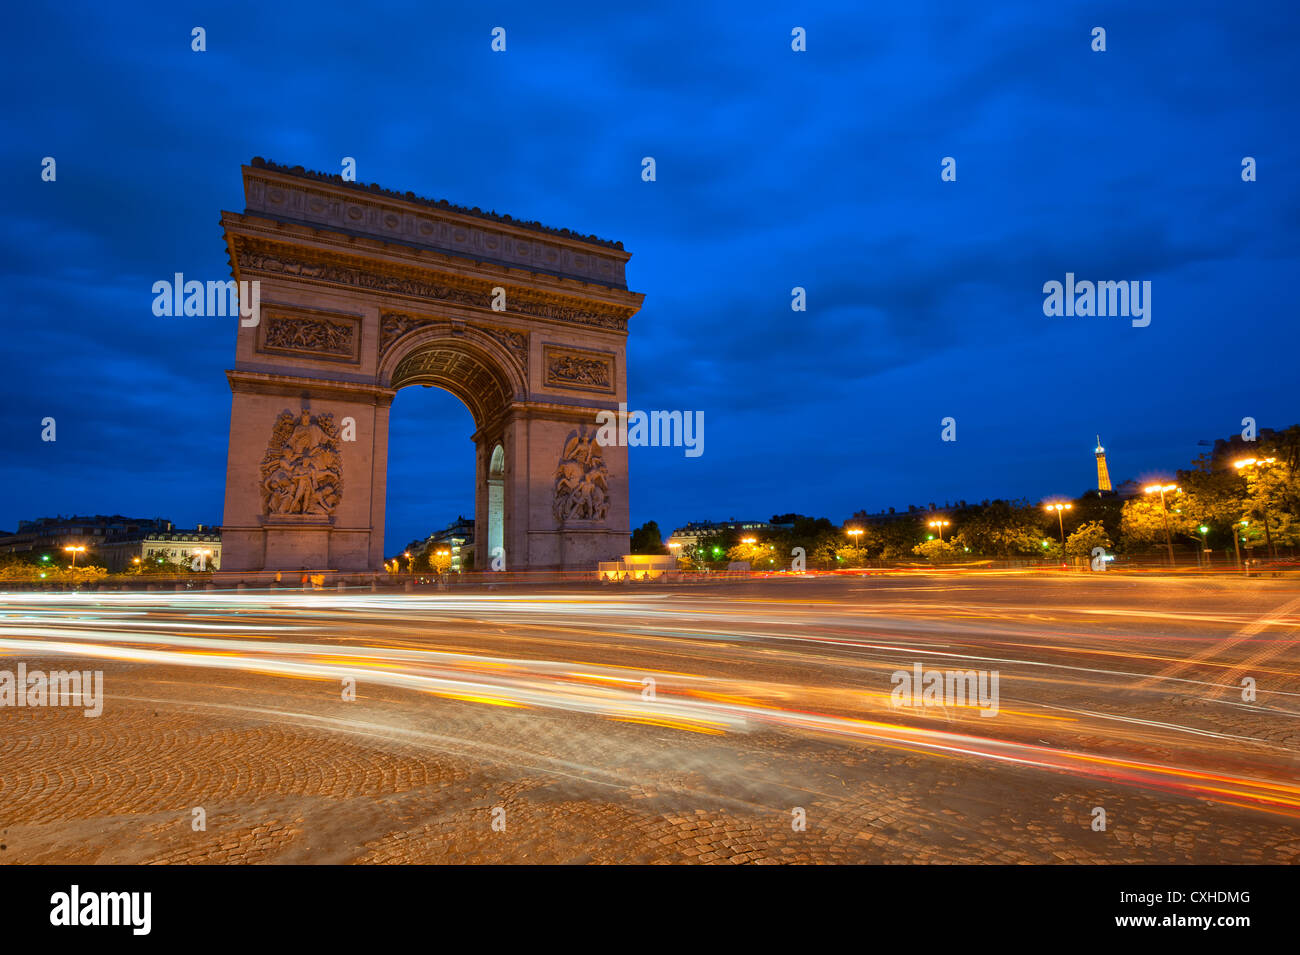 Paris. Avenue Des Champs Elysees. View from Arc De Triomphe in Paris.  France Editorial Photography - Image of elysees, avenue: 178634177